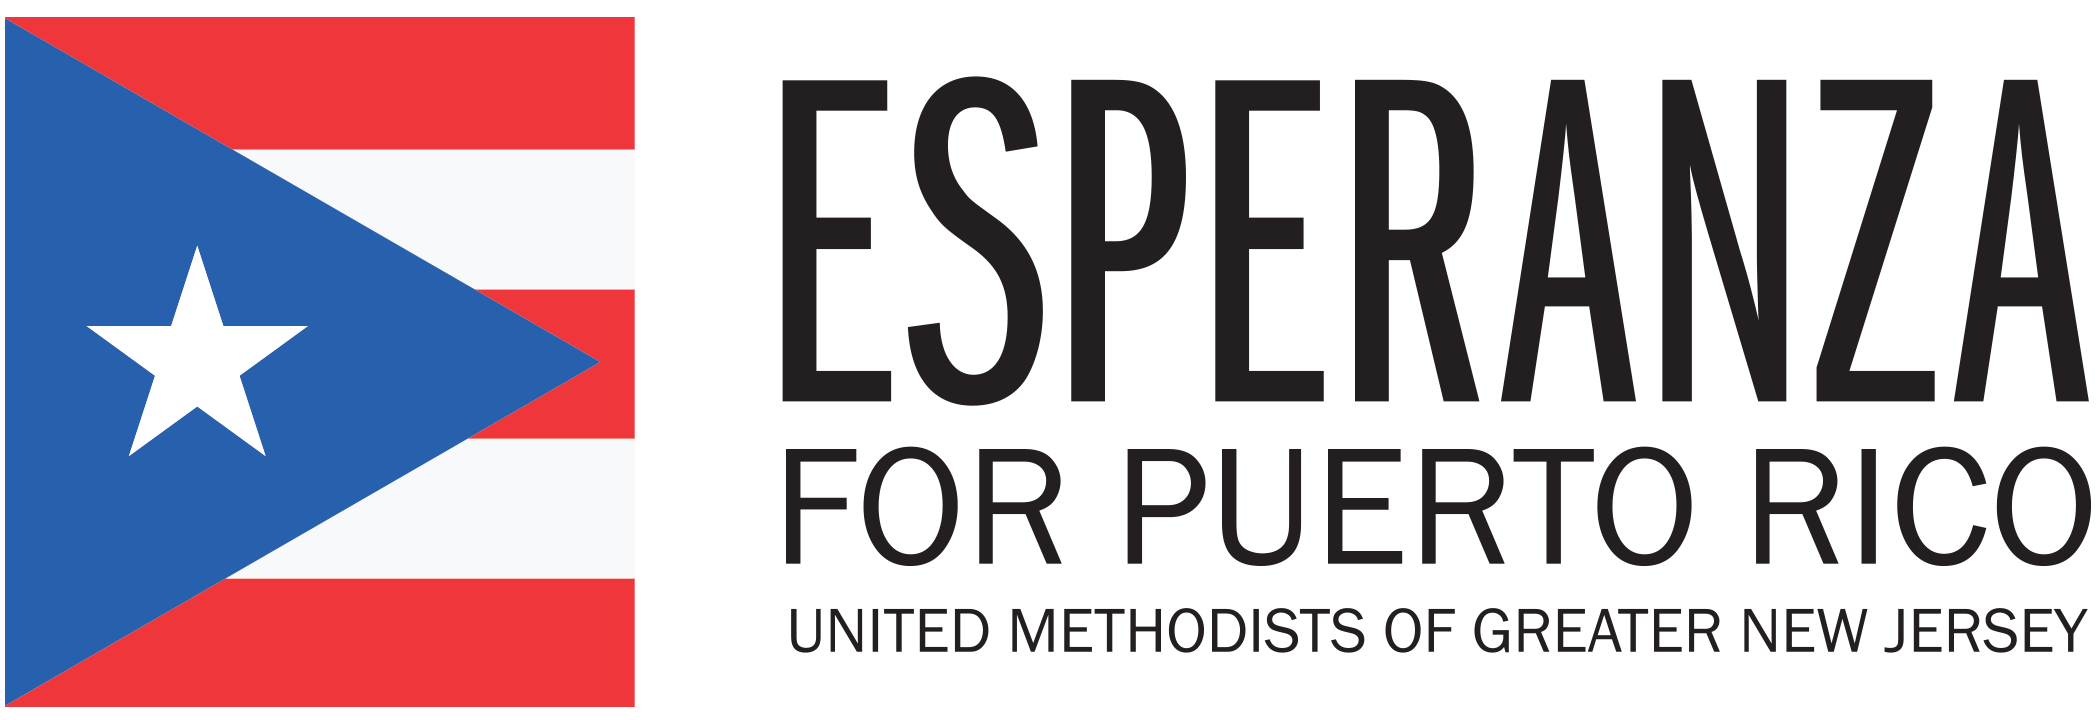 Esperanza Logo - Esperanza logo | United Methodist Church of Greater New Jersey